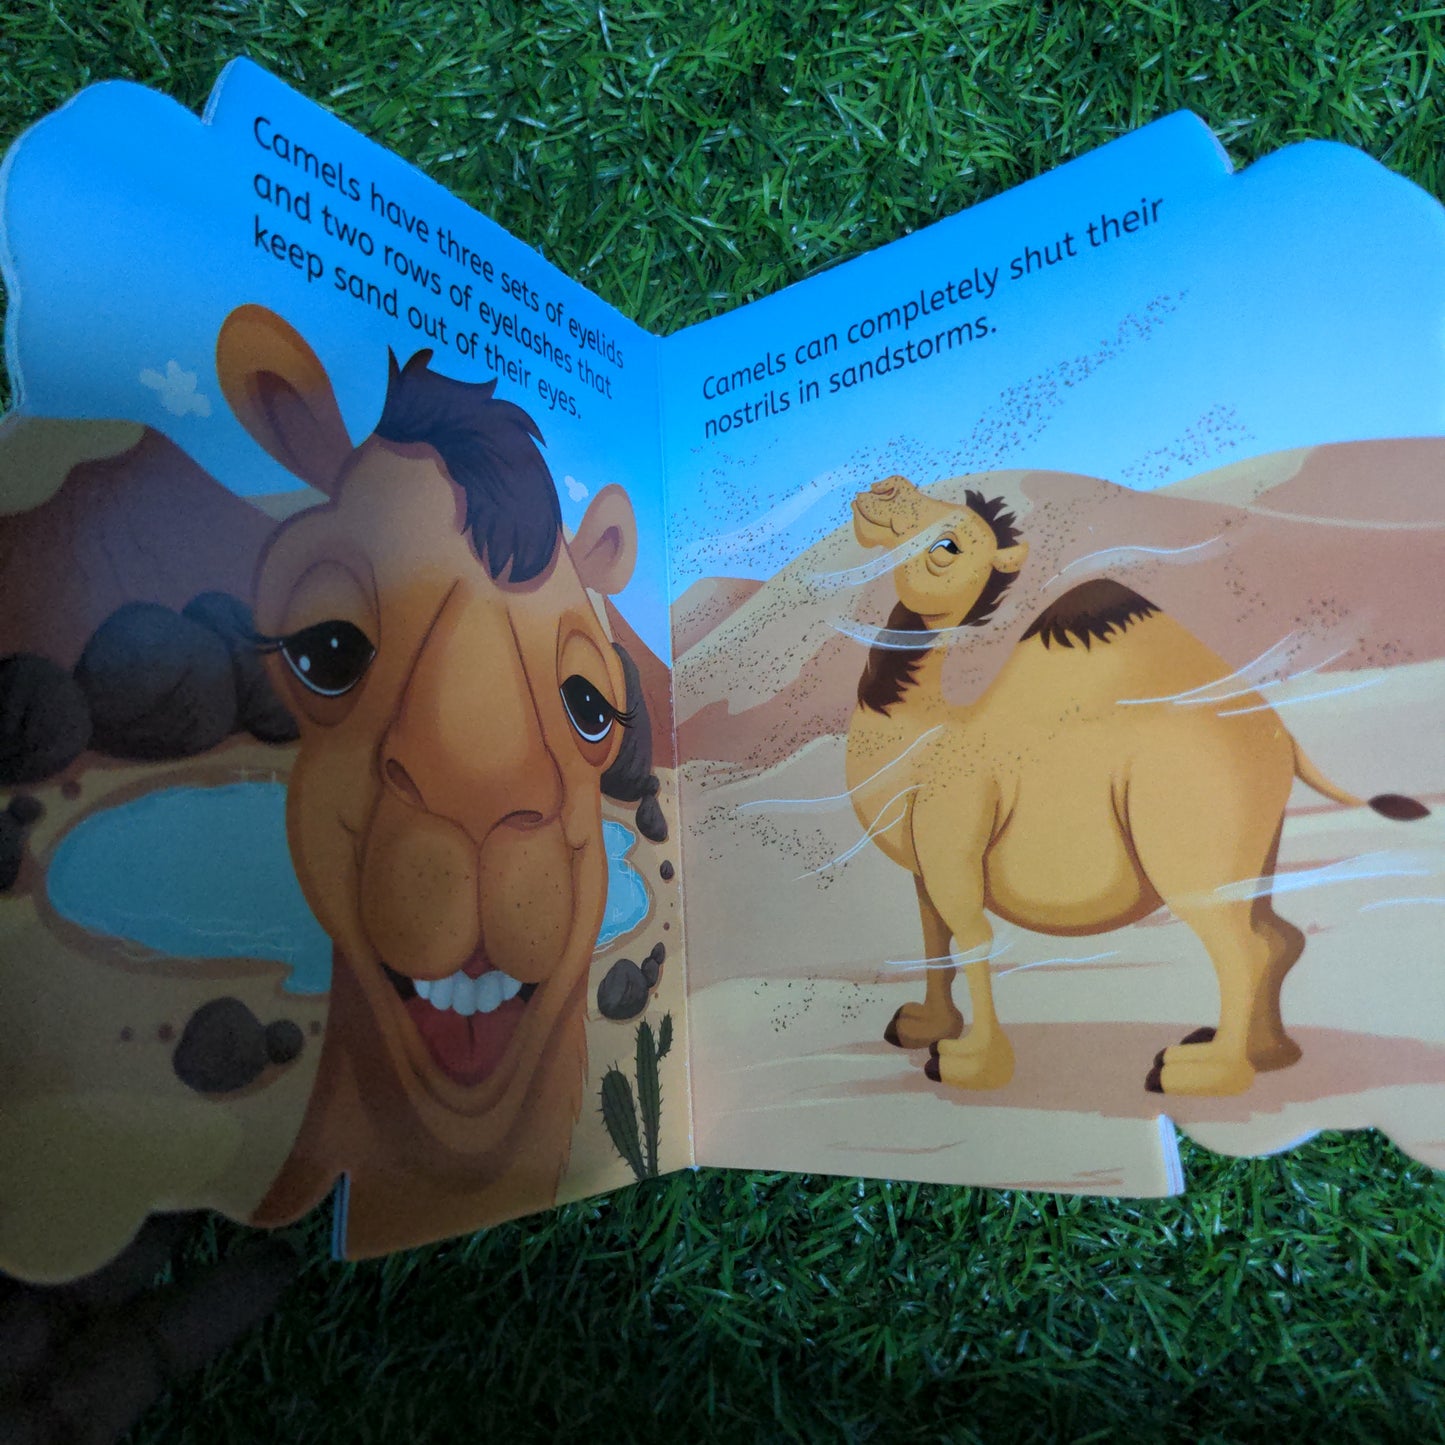 Camel - Shaped Board Book